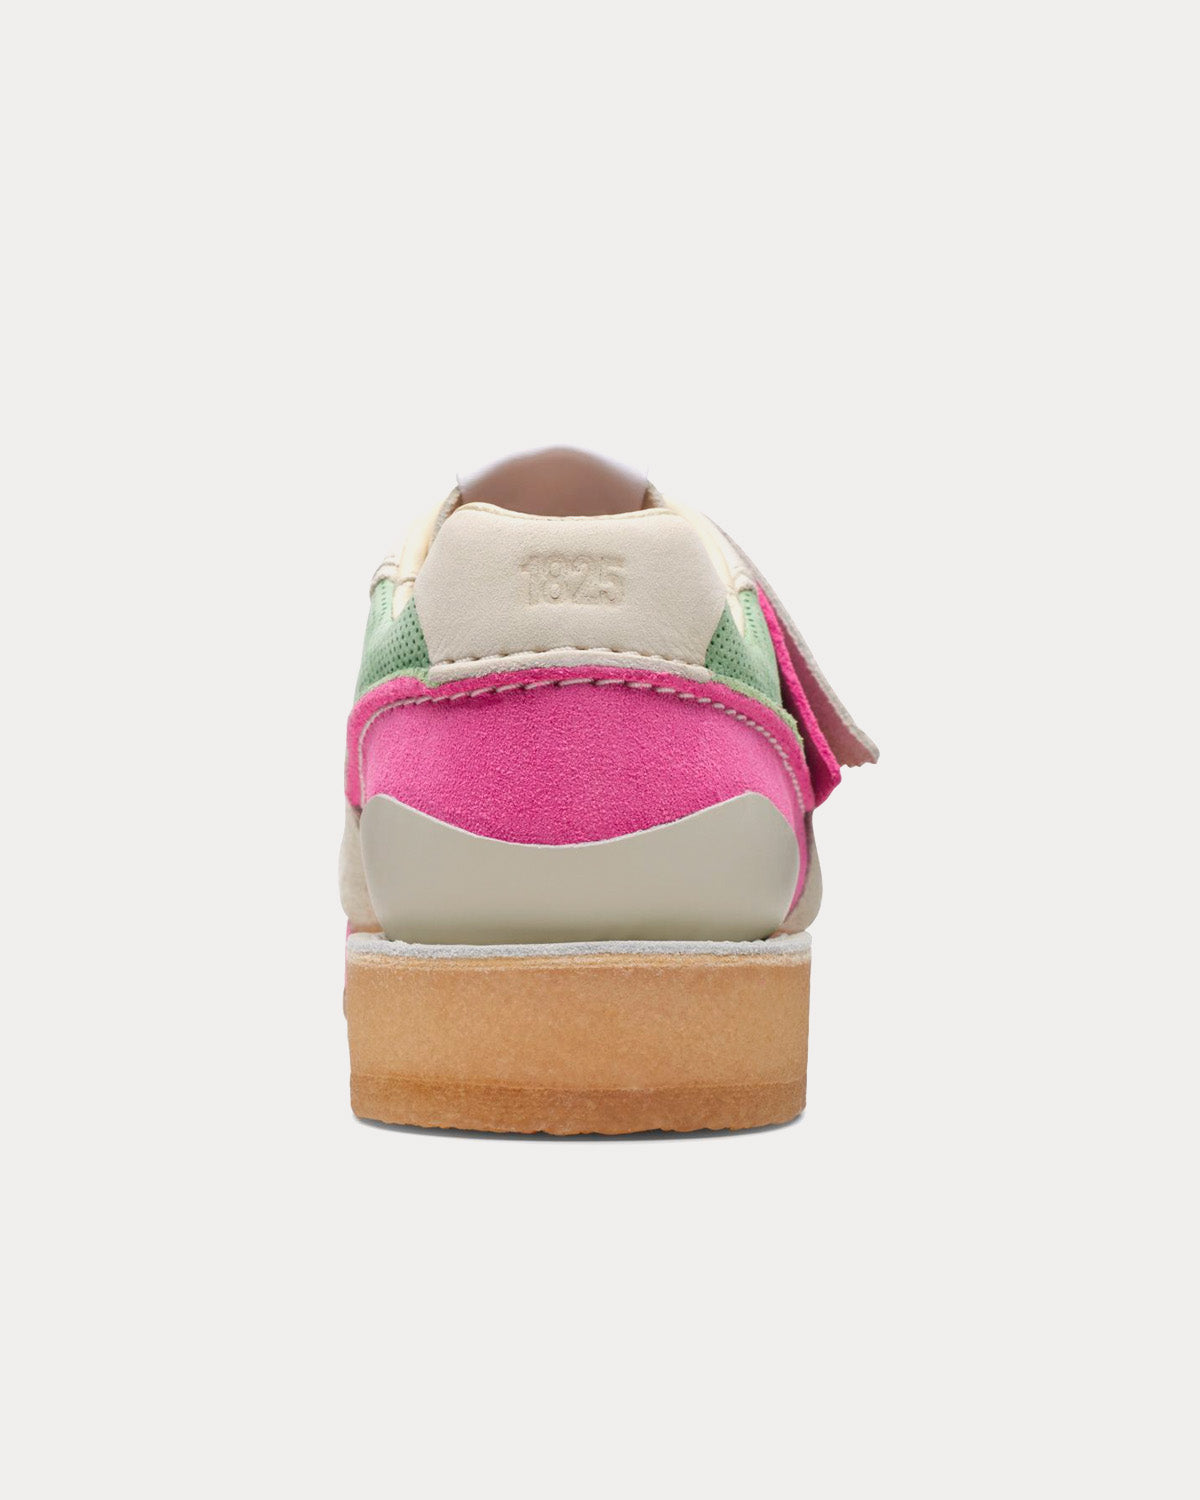 Clarks - Tor Run Pink / Green Combi Low Top Sneakers